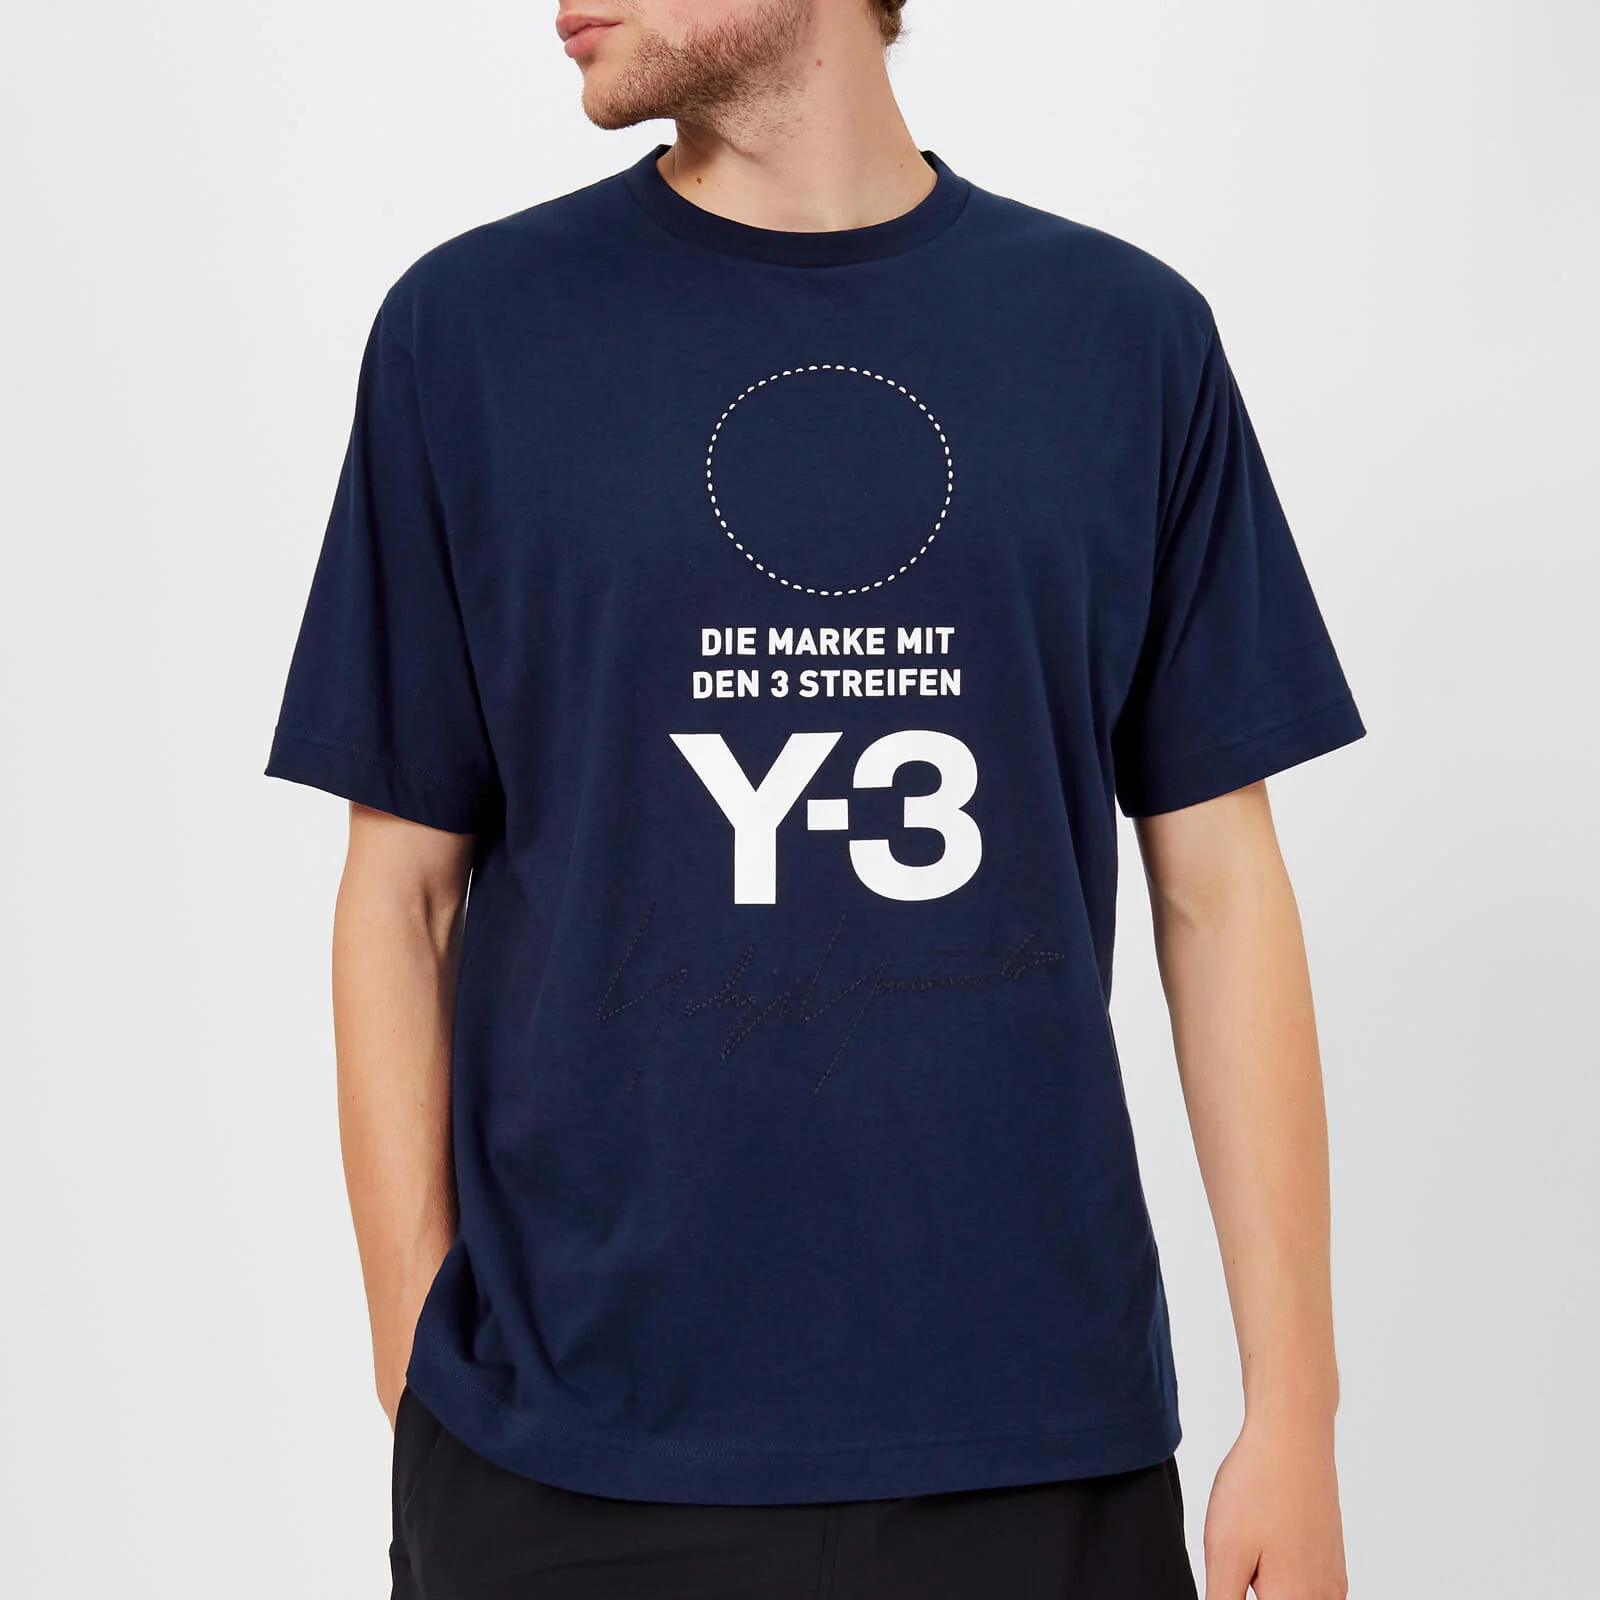 Y-3 Men's Stacked Short Sleeve T-Shirt - Night Indigo Image 1